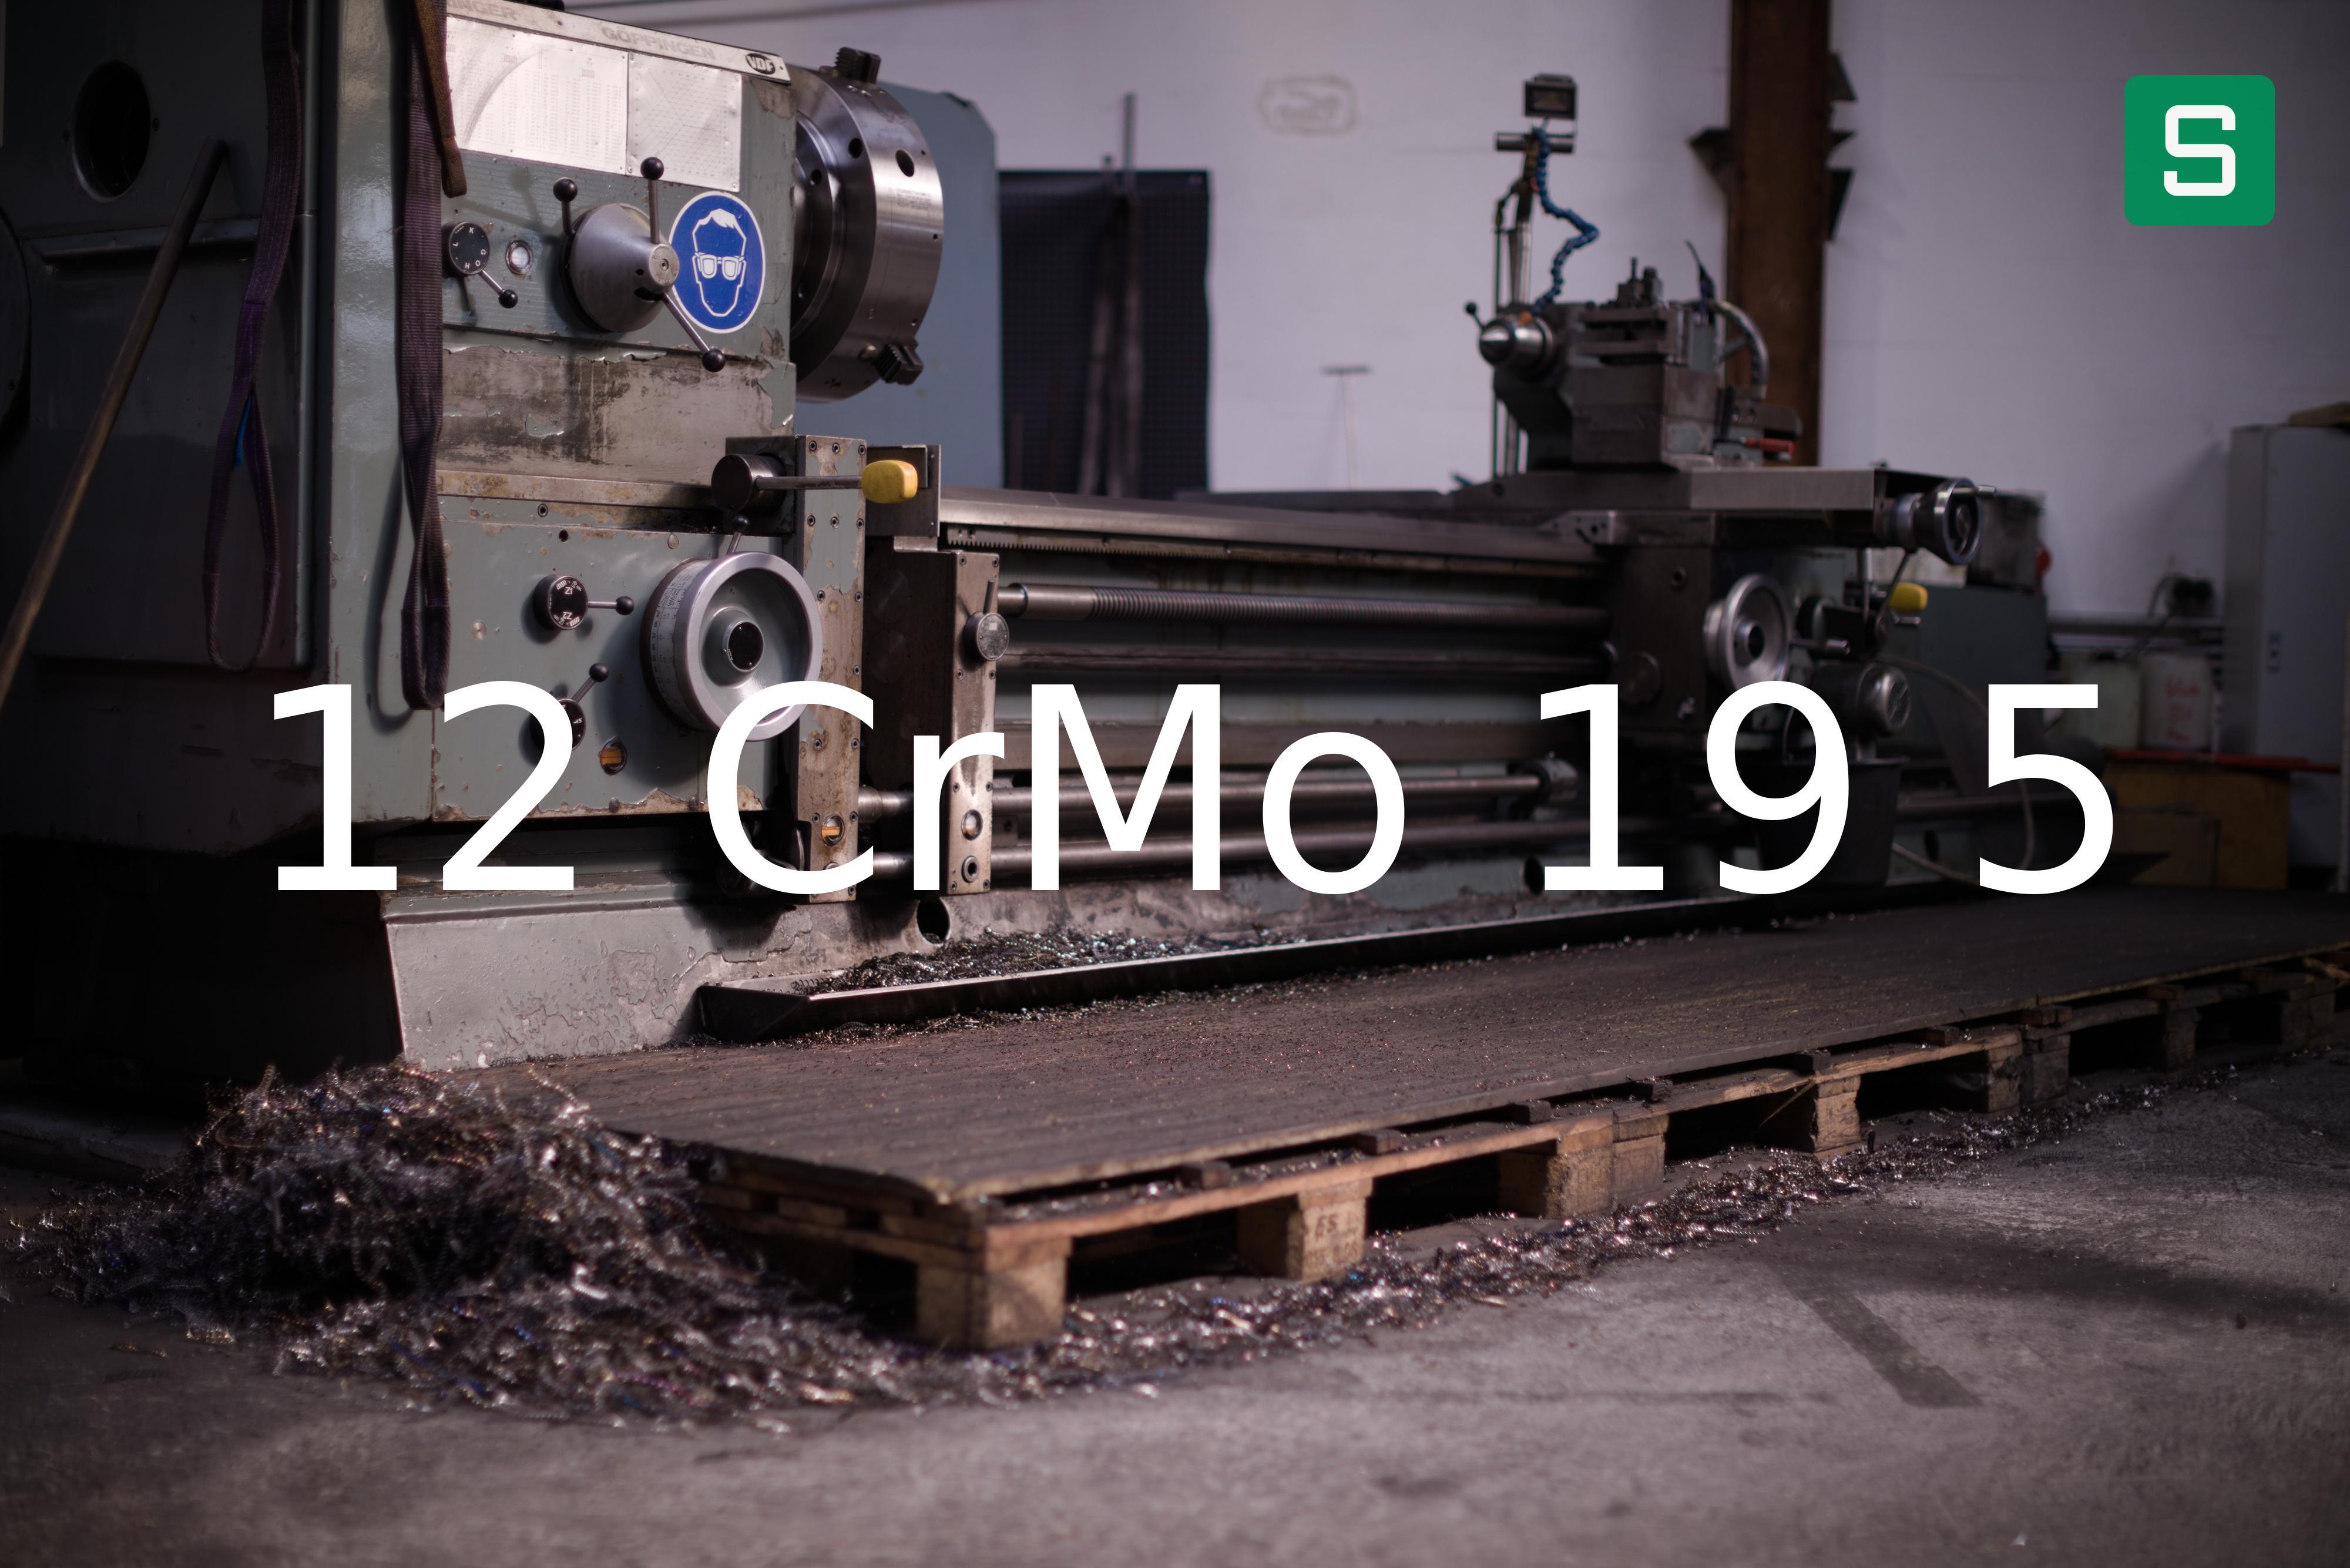 Steel Material: 12 CrMo 19 5